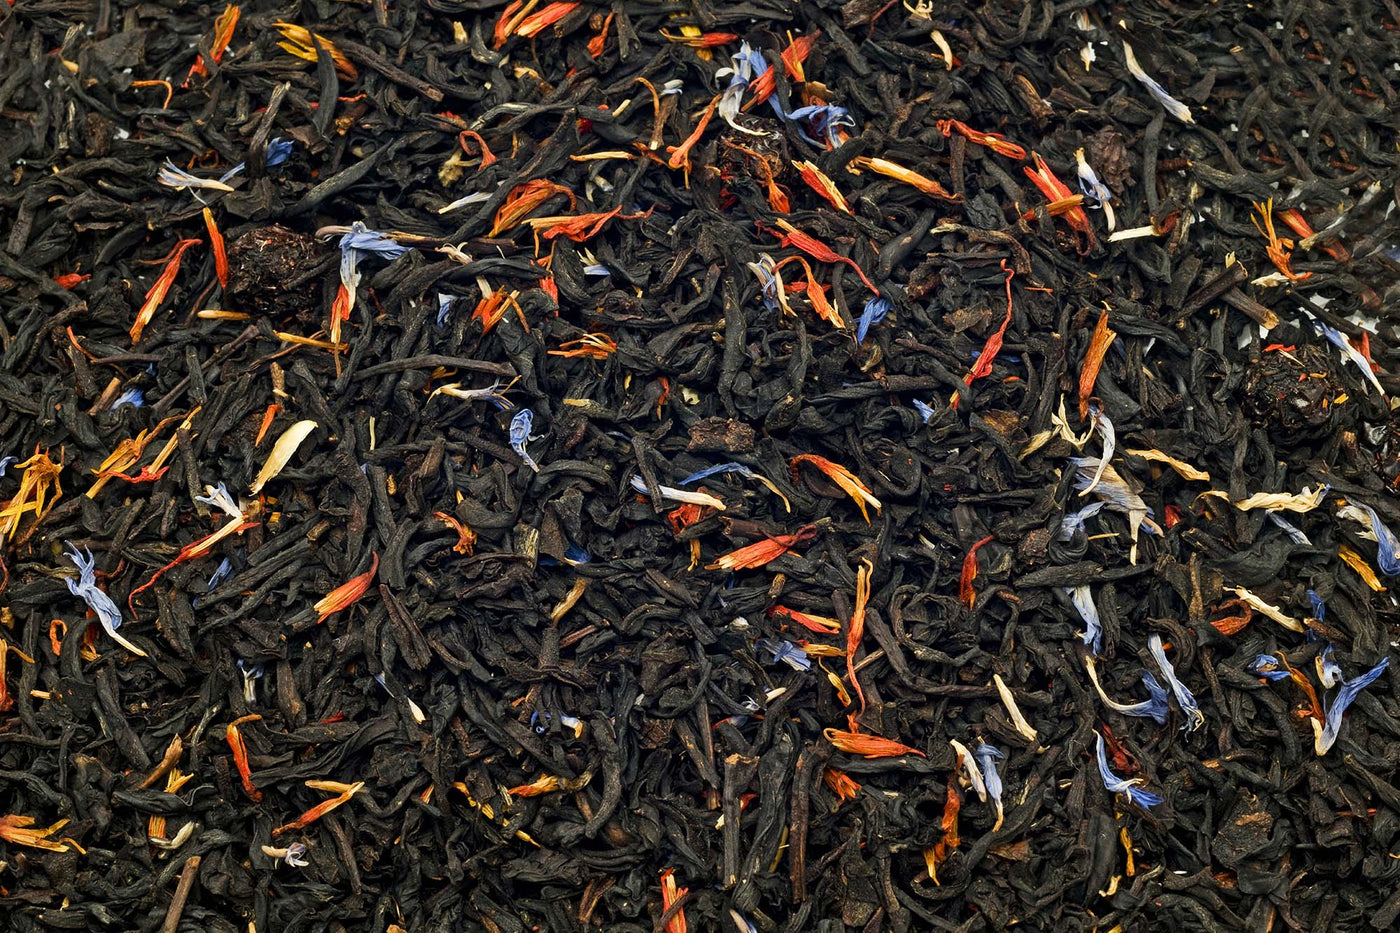 Schwarzer Tee aromatisiert